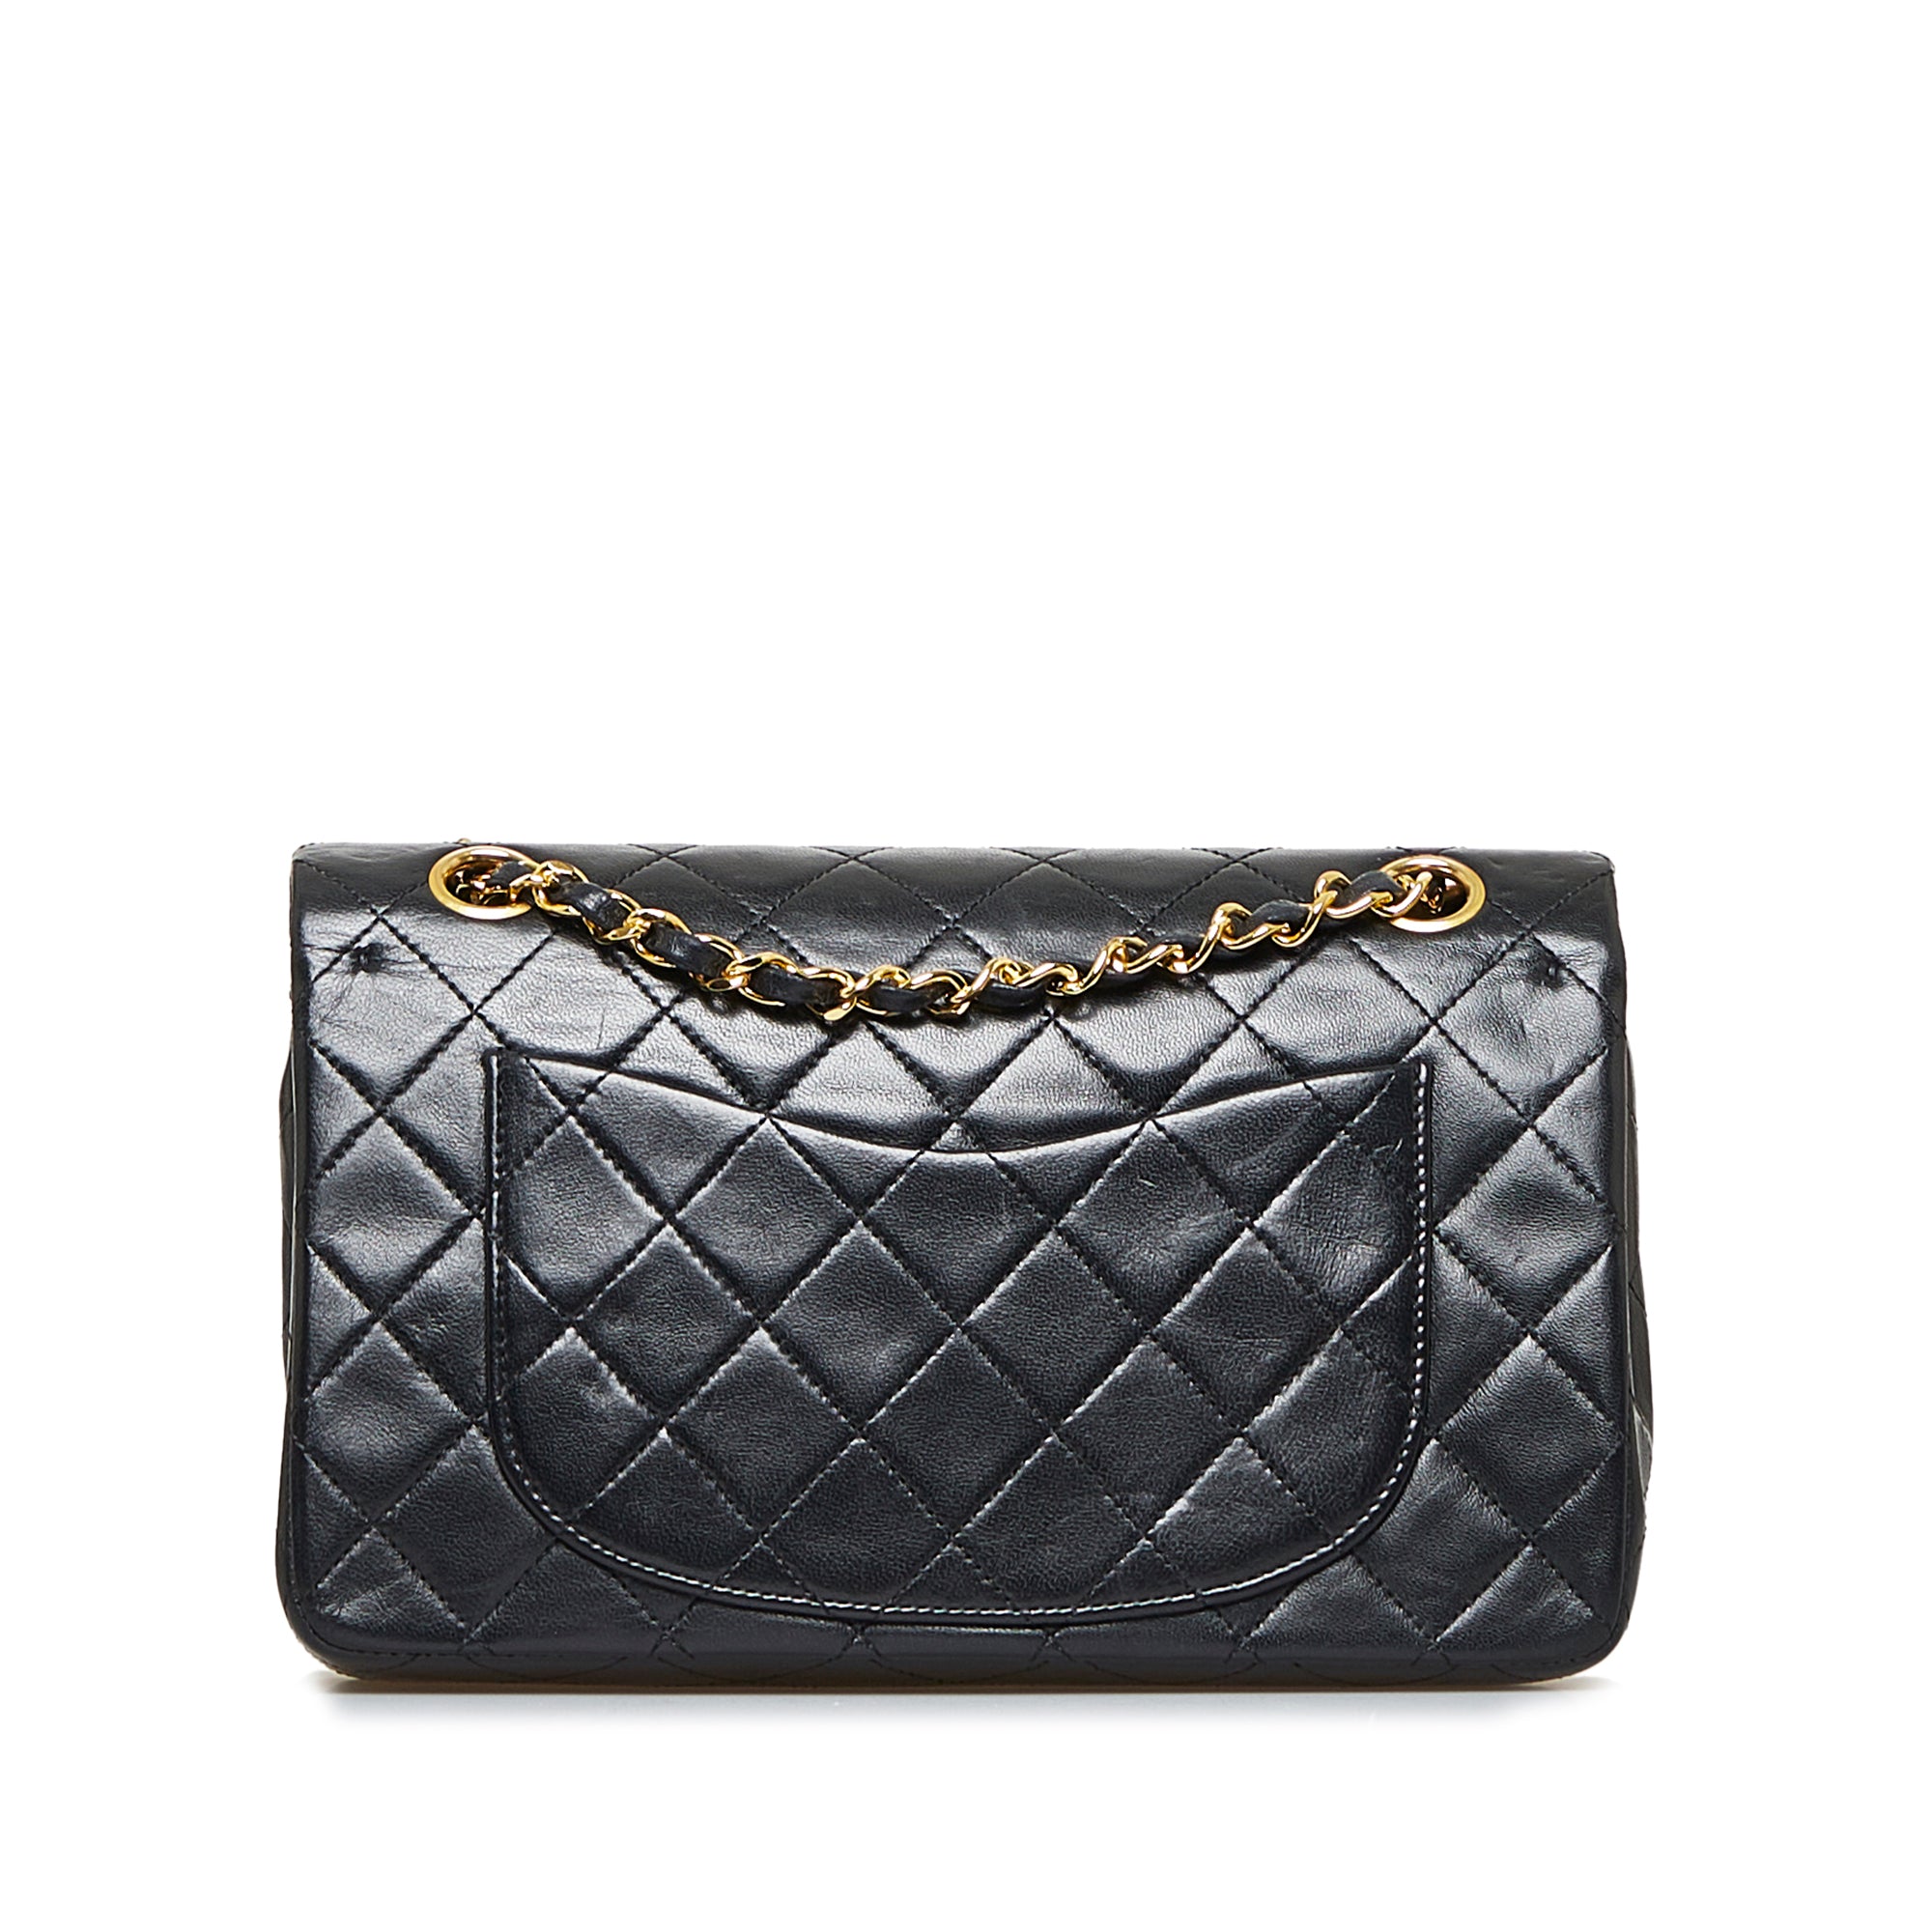 Black Chanel Small Classic Lambskin Double Flap Shoulder Bag, Cra-wallonieShops Revival